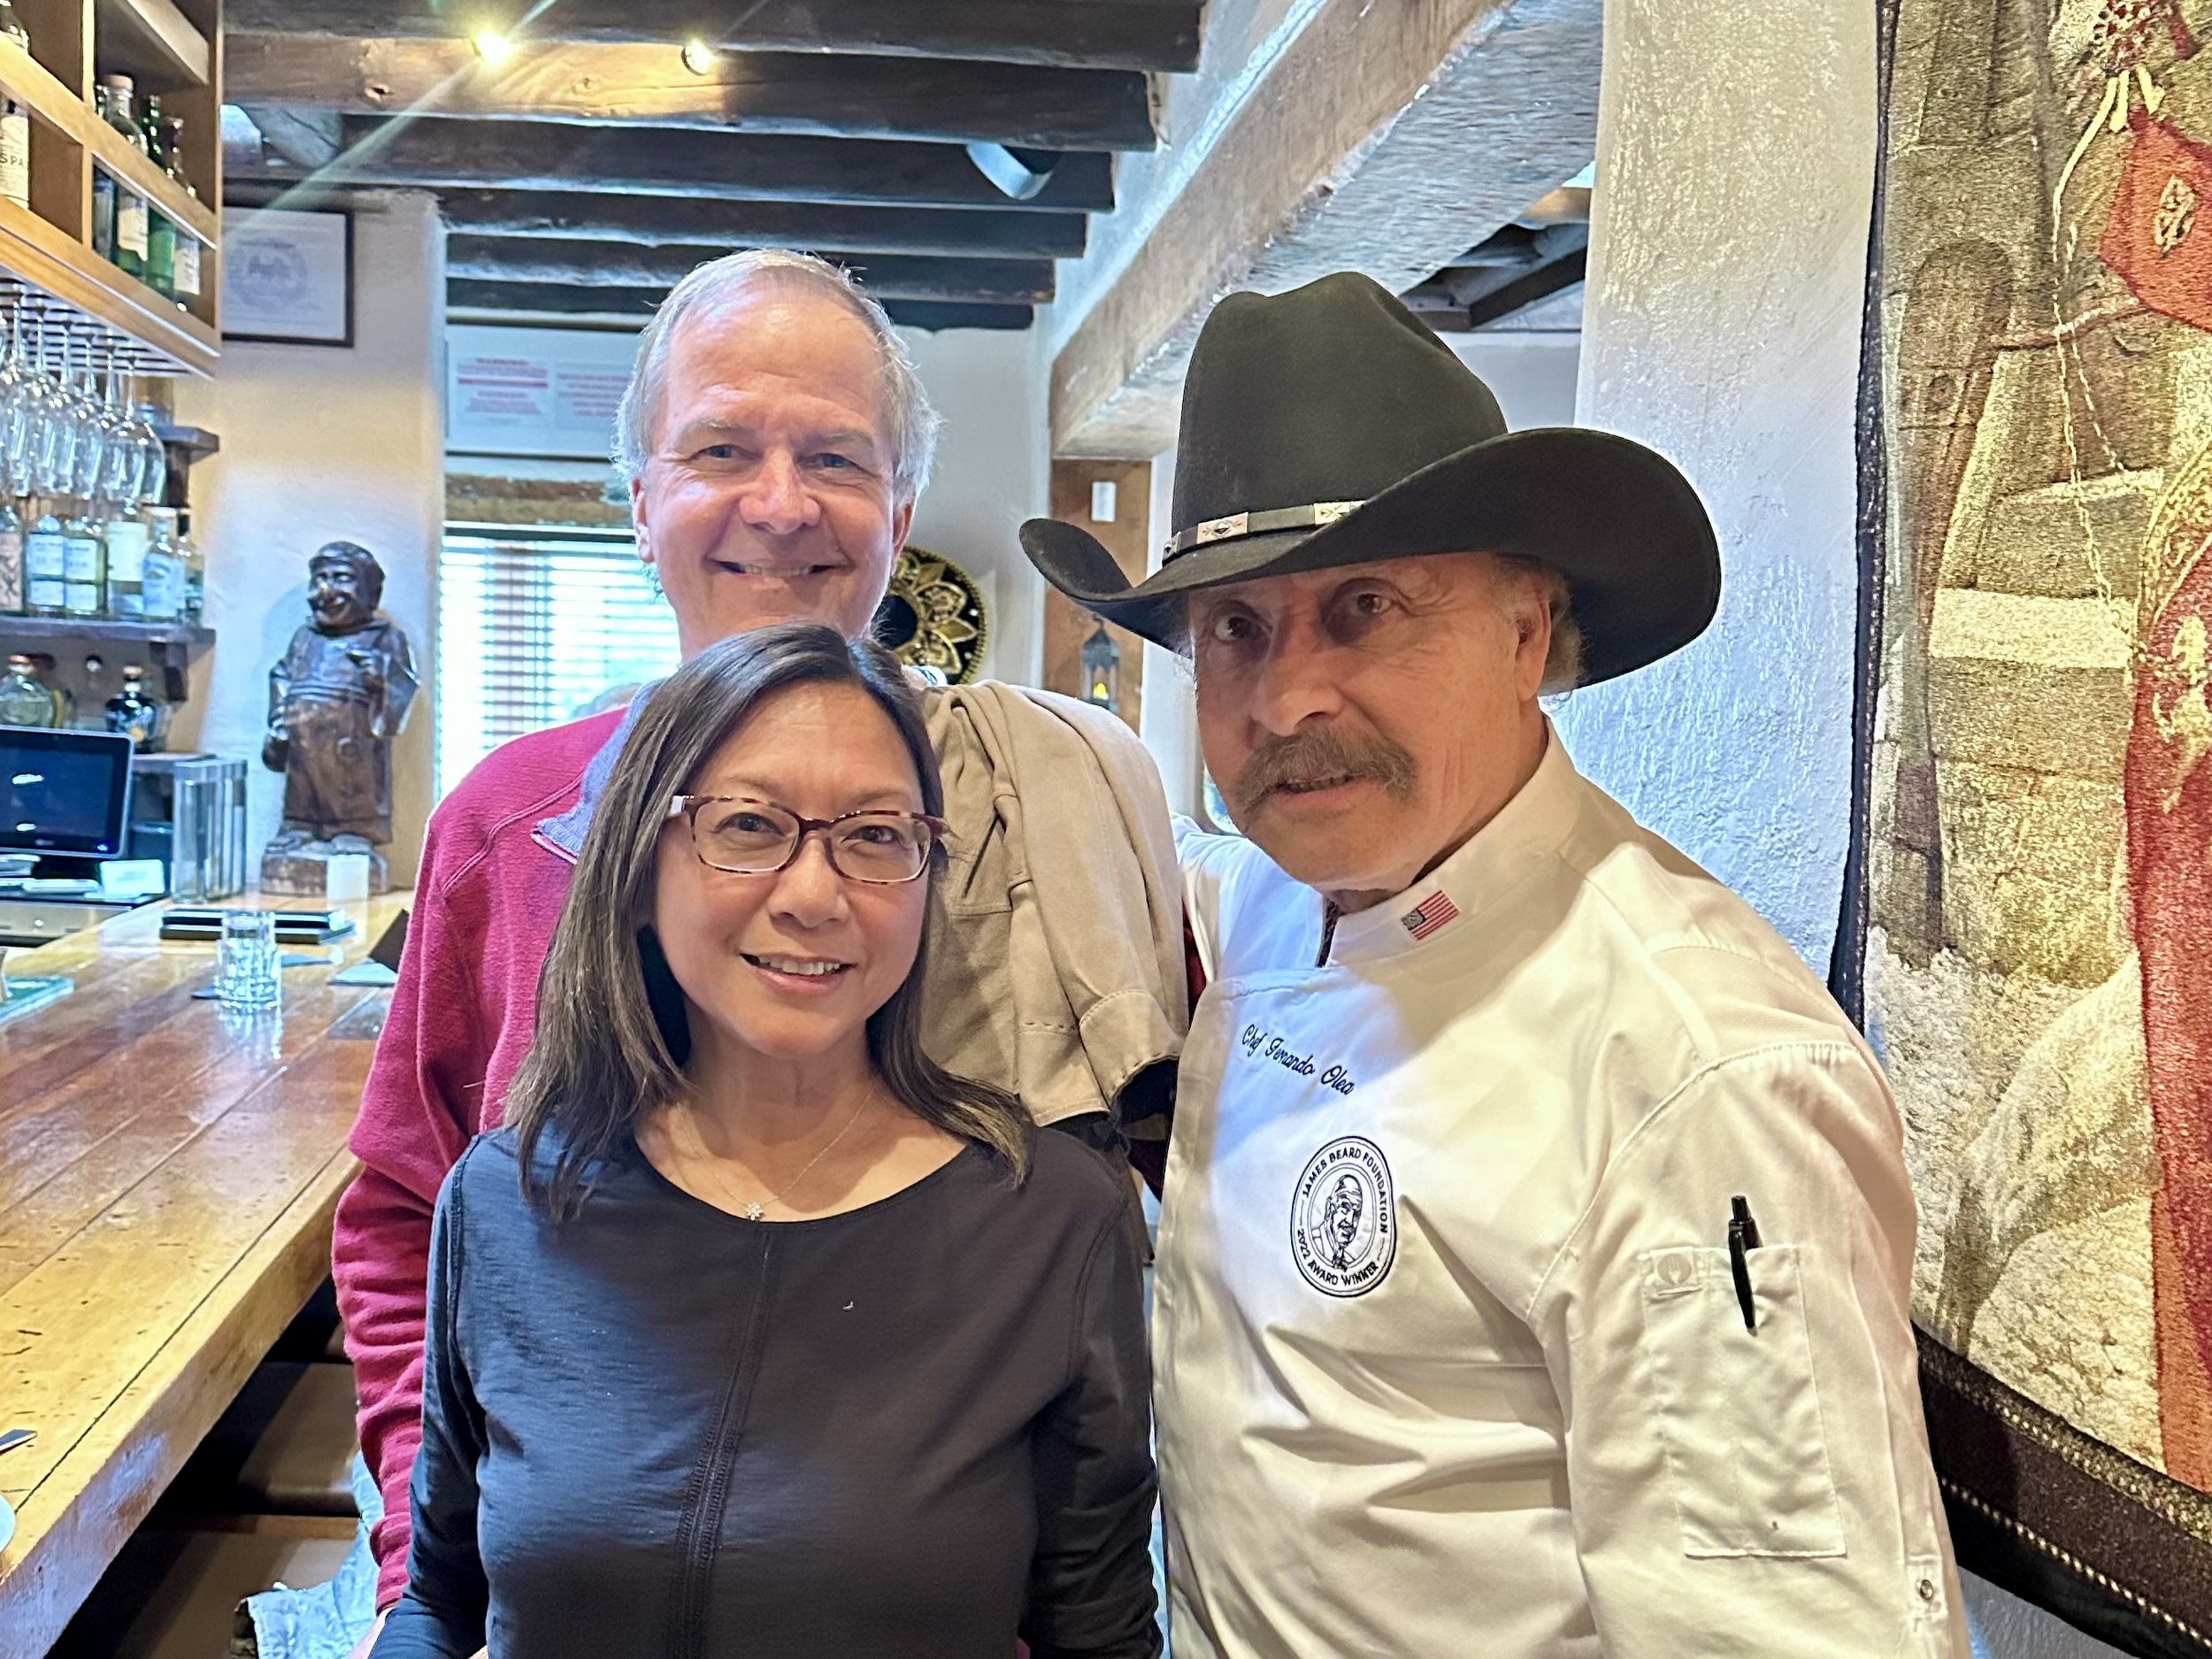 Such an honor to meet Chef Fernando Olea!